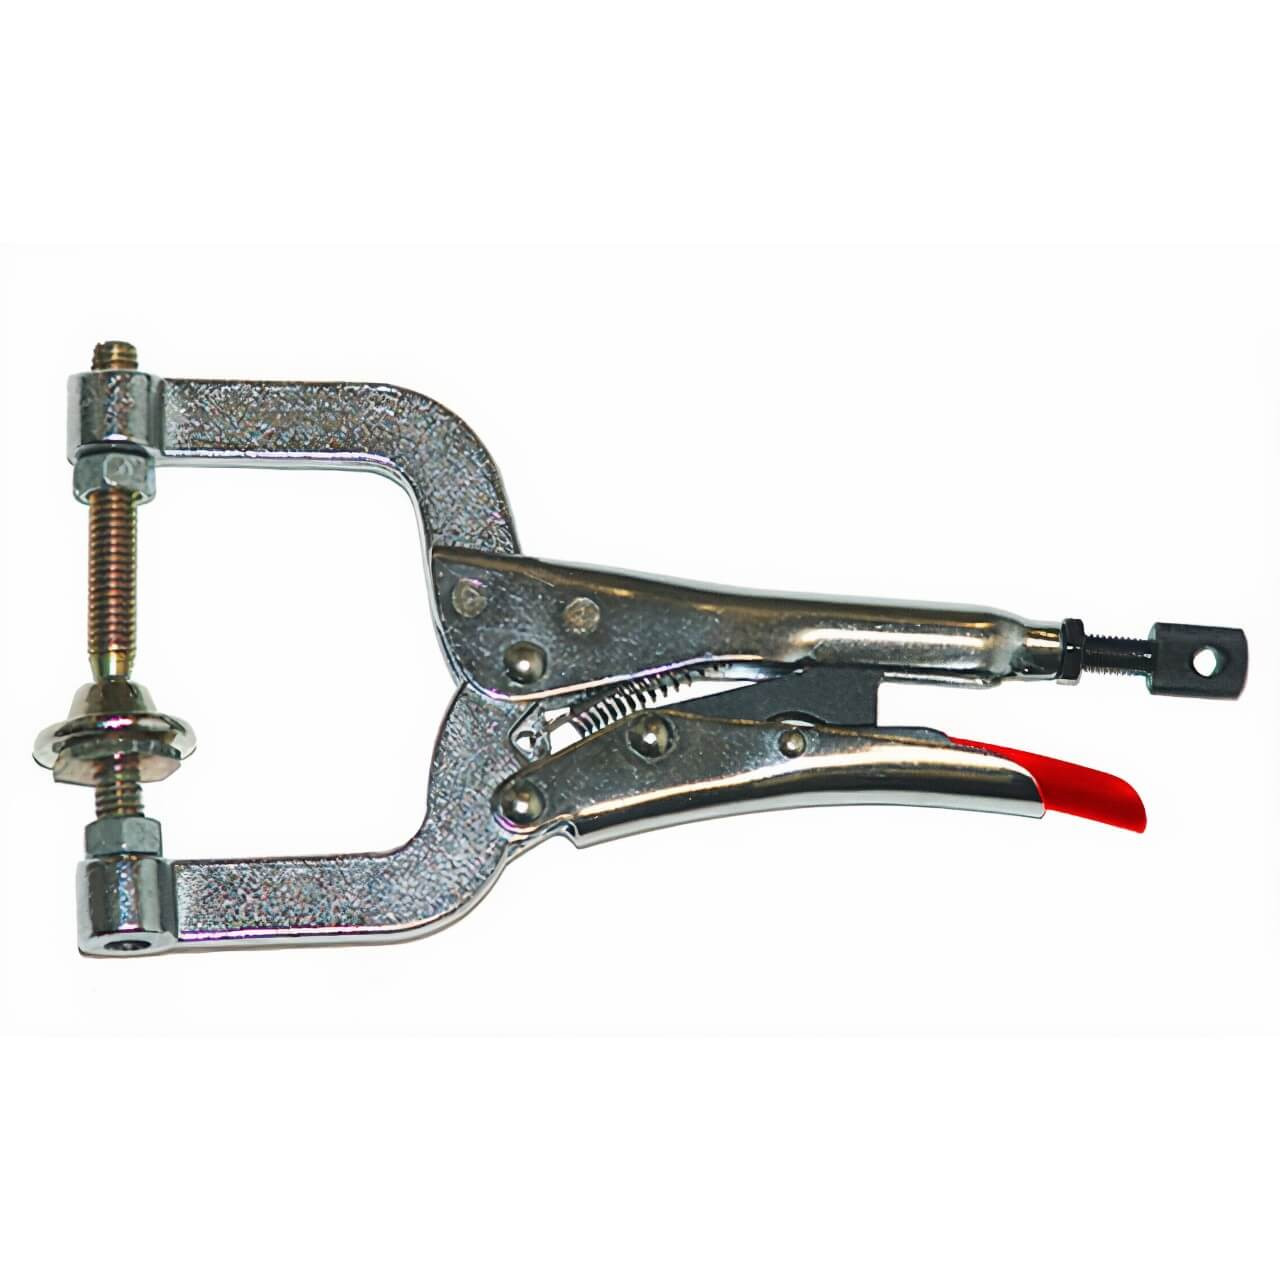 Stronghand Multi Purpose Locking Plier 150mm